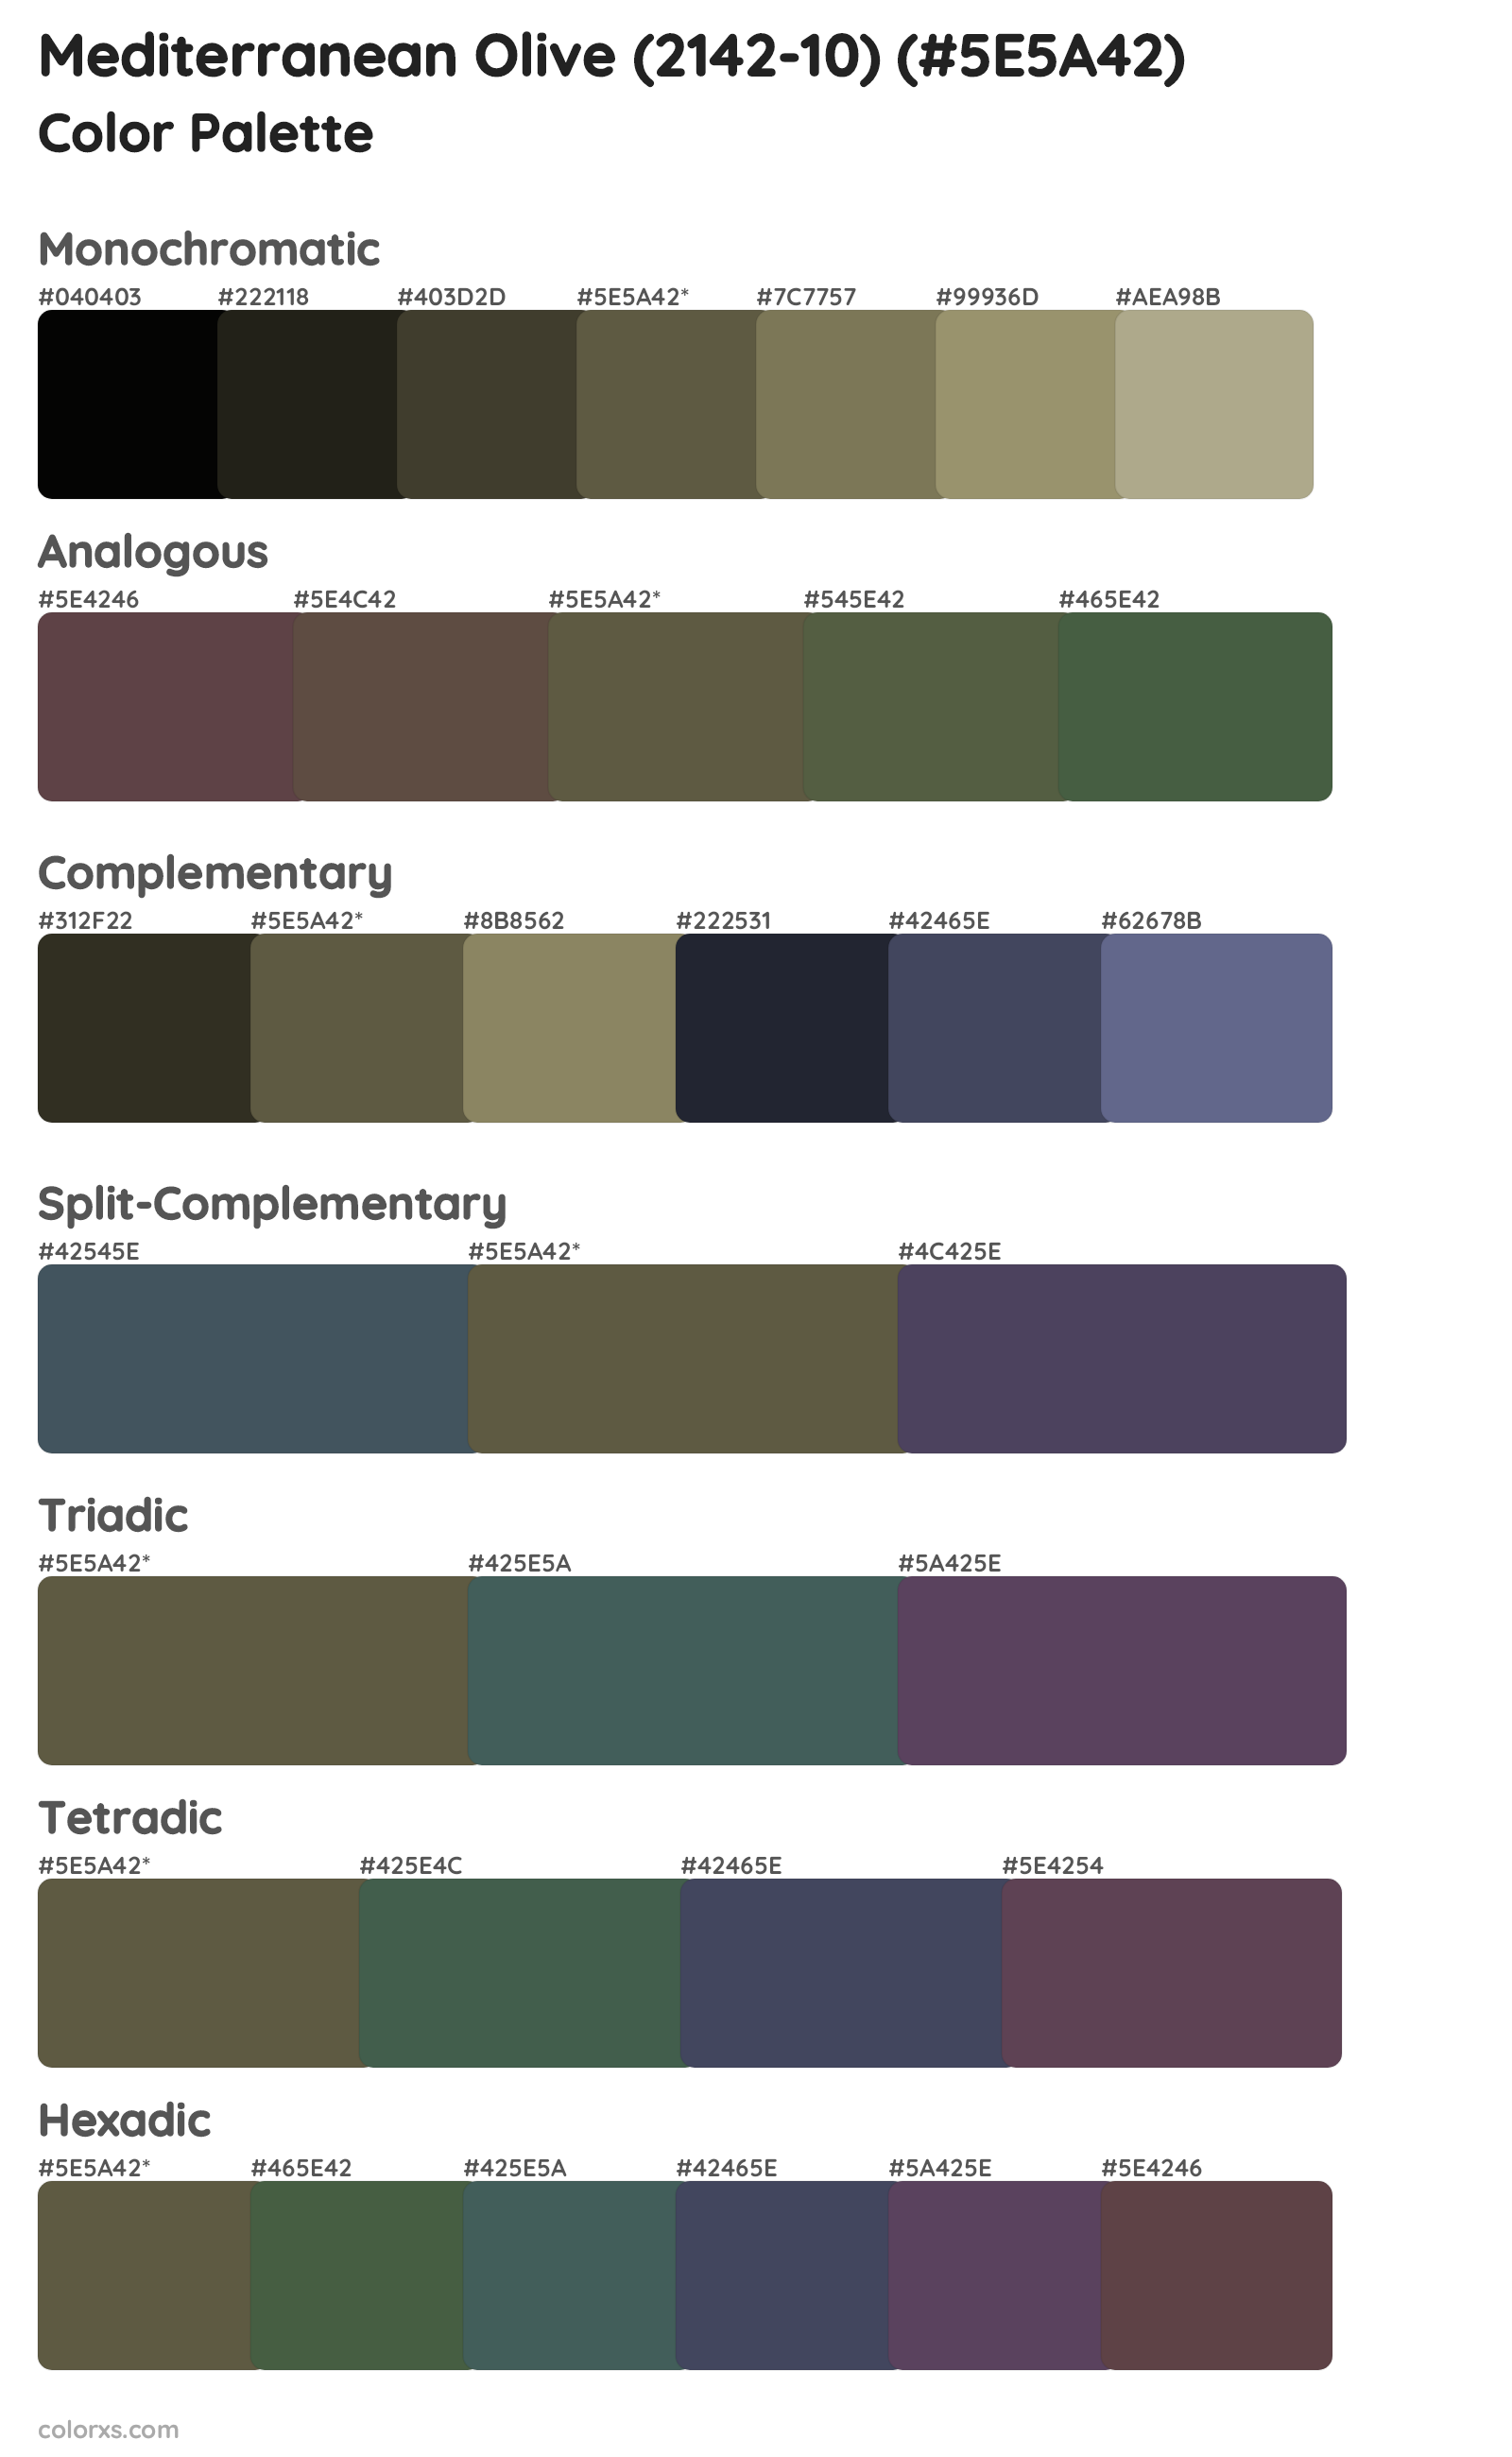 Mediterranean Olive (2142-10) Color Scheme Palettes